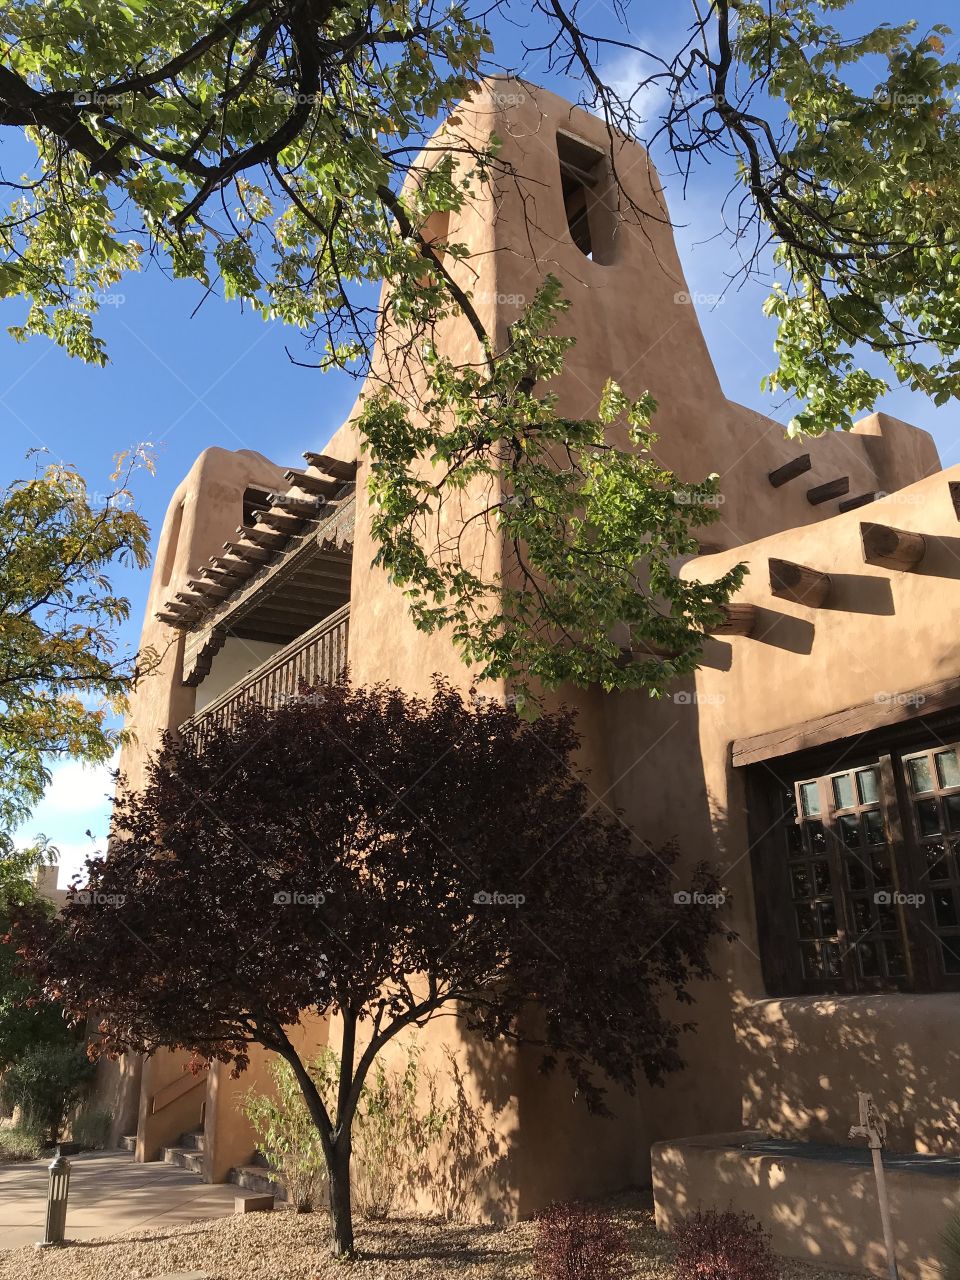 Adobe Architecture of downtown Santa Fe, New Mexico